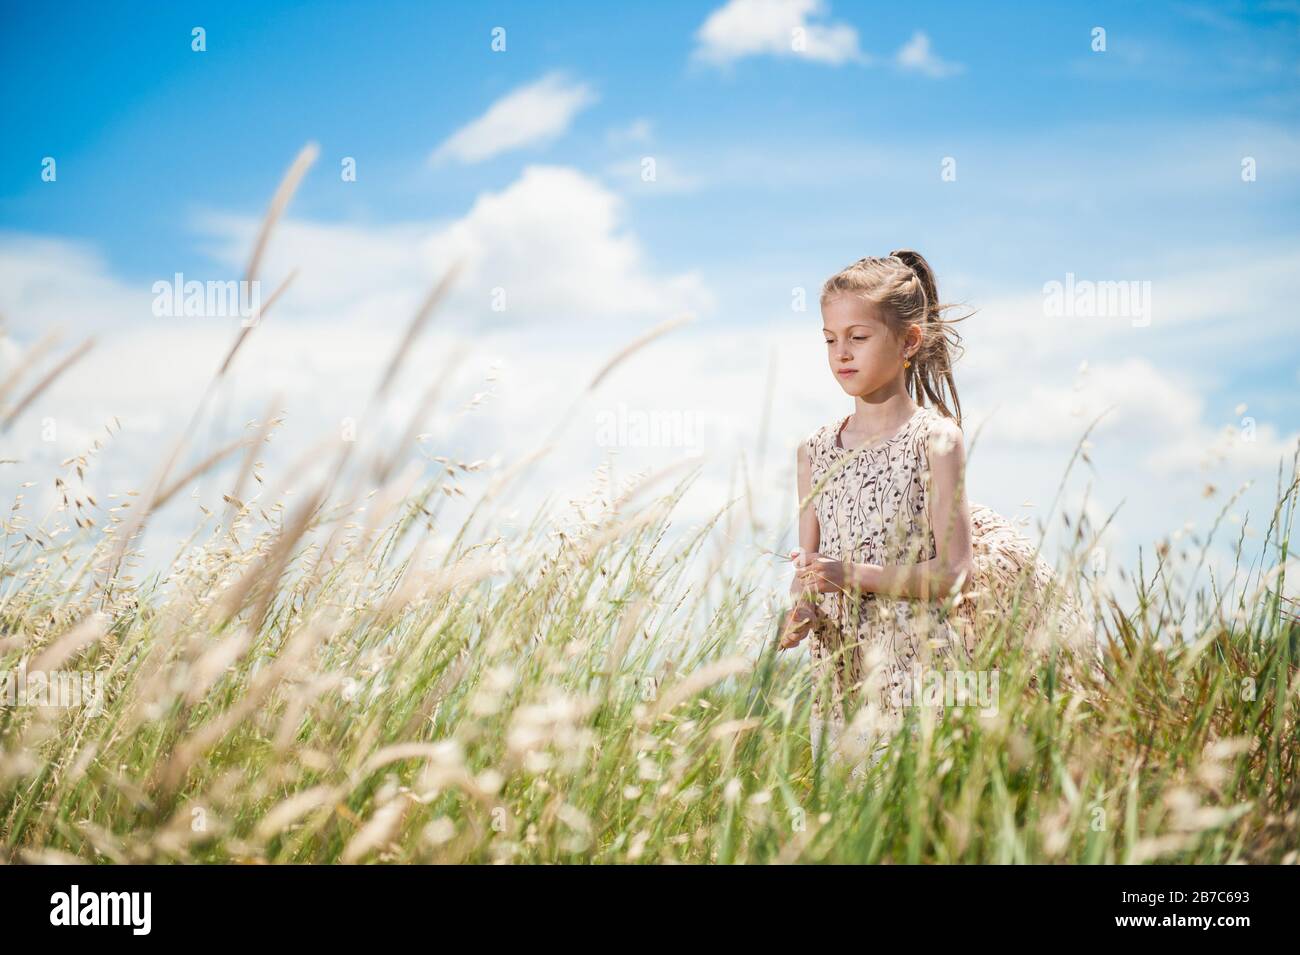 beautiful little thin girl in summer dress in grass field under blue cloudy sky Stock Photo